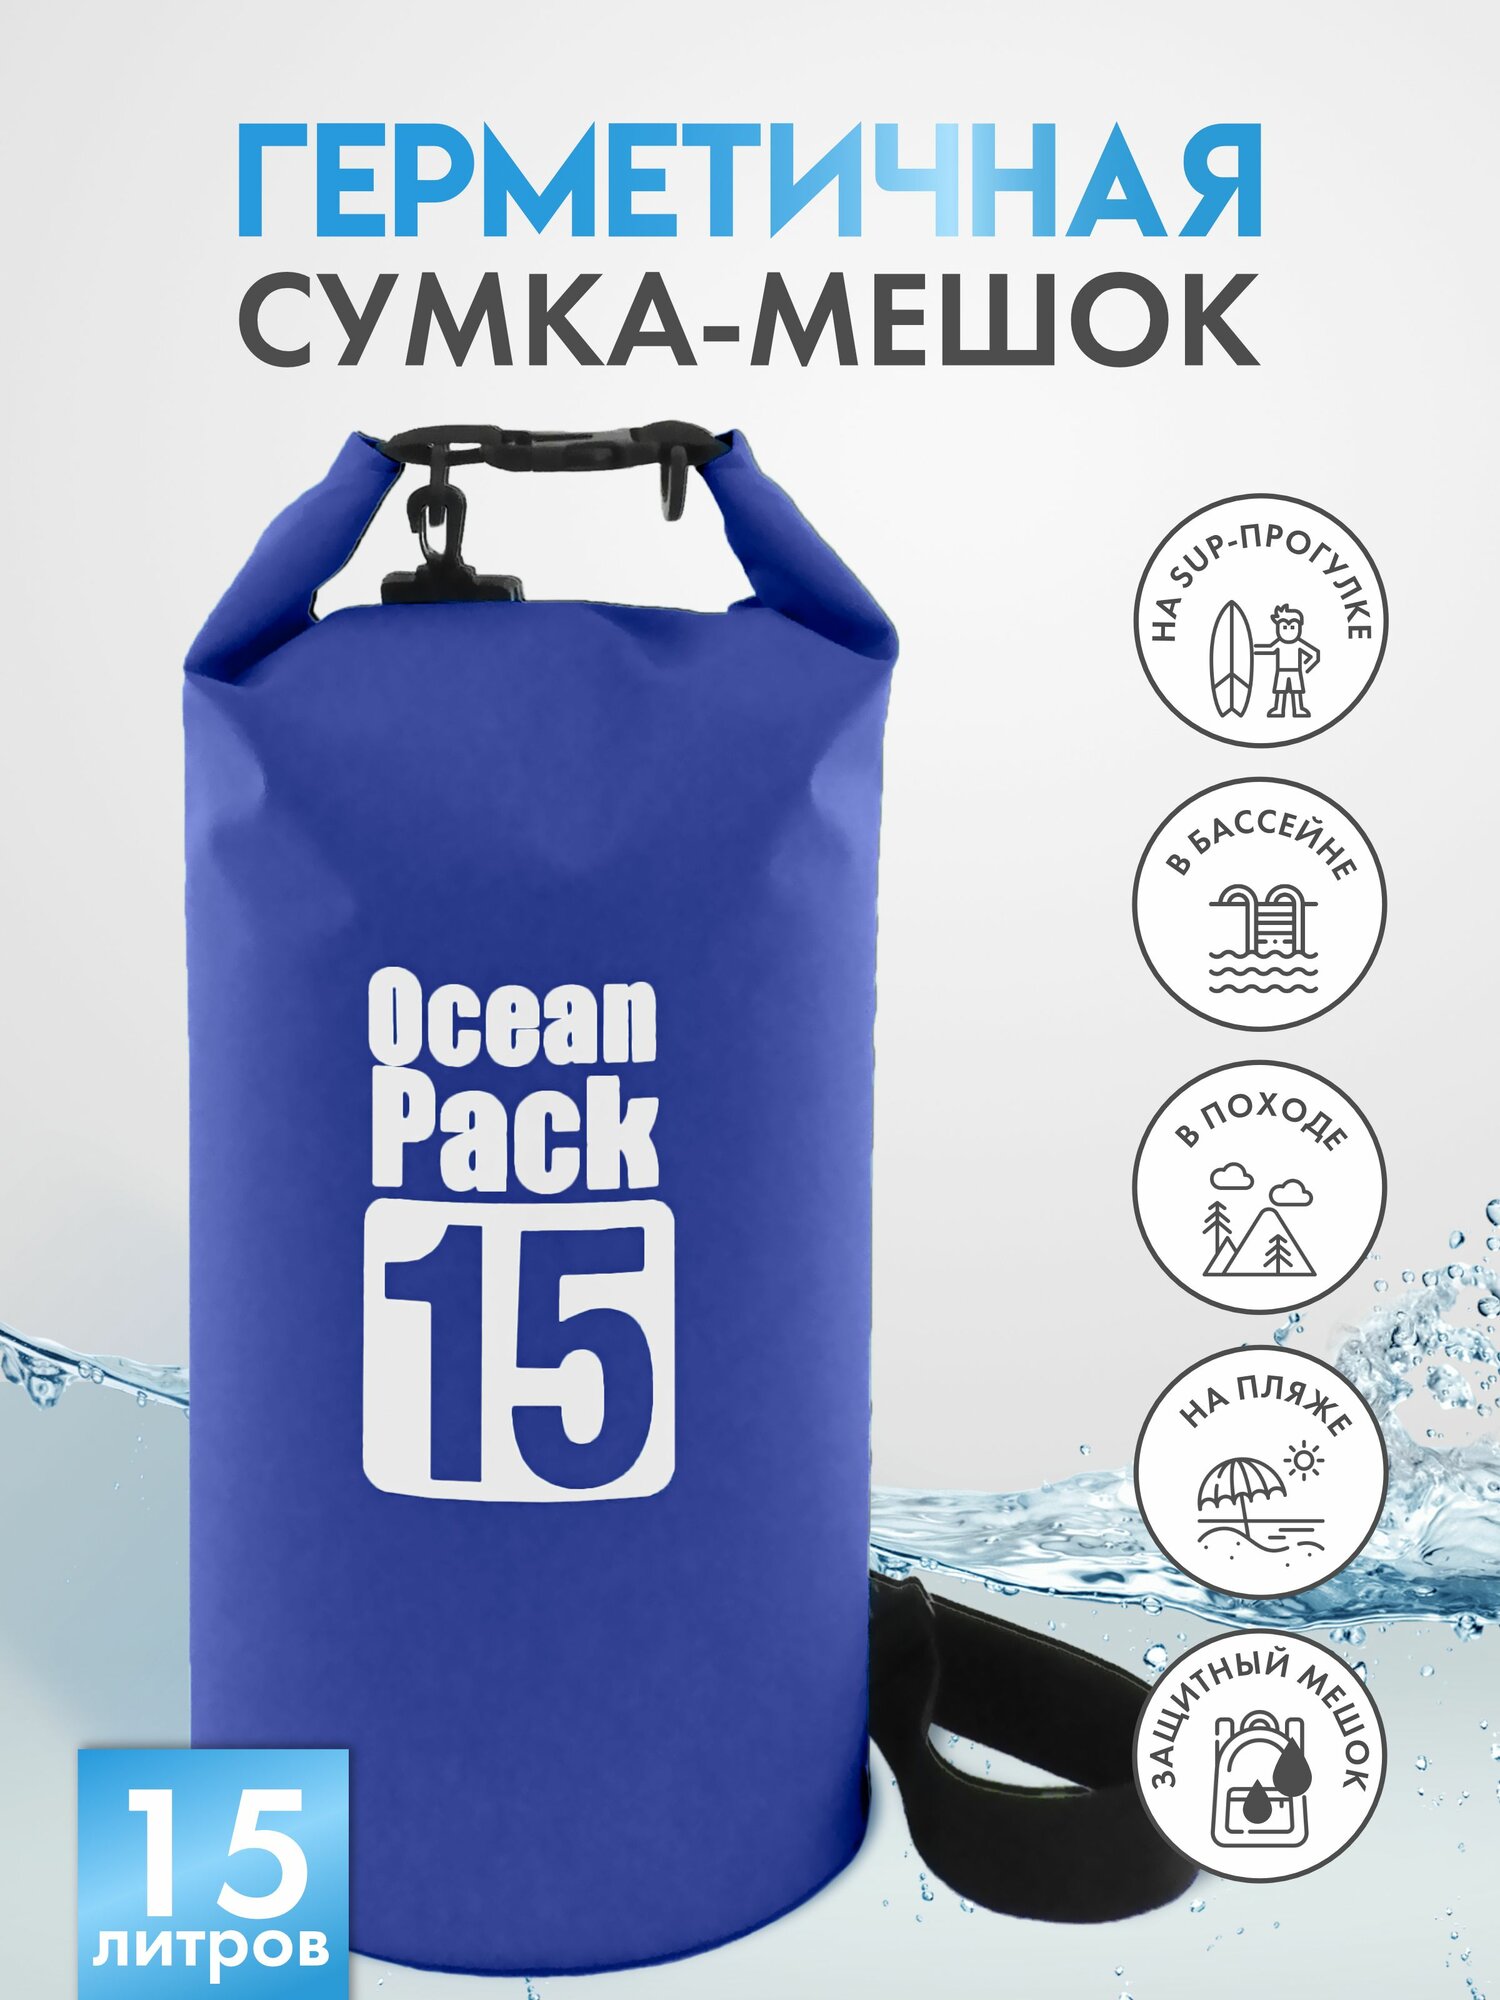 Гермомешок / герметичный рюкзак / герморюкзак / гермосумка / герметичная сумка / сумка для сапборда / сумка для сап борда / ocean pack / dry bag / гермобаул 15 л